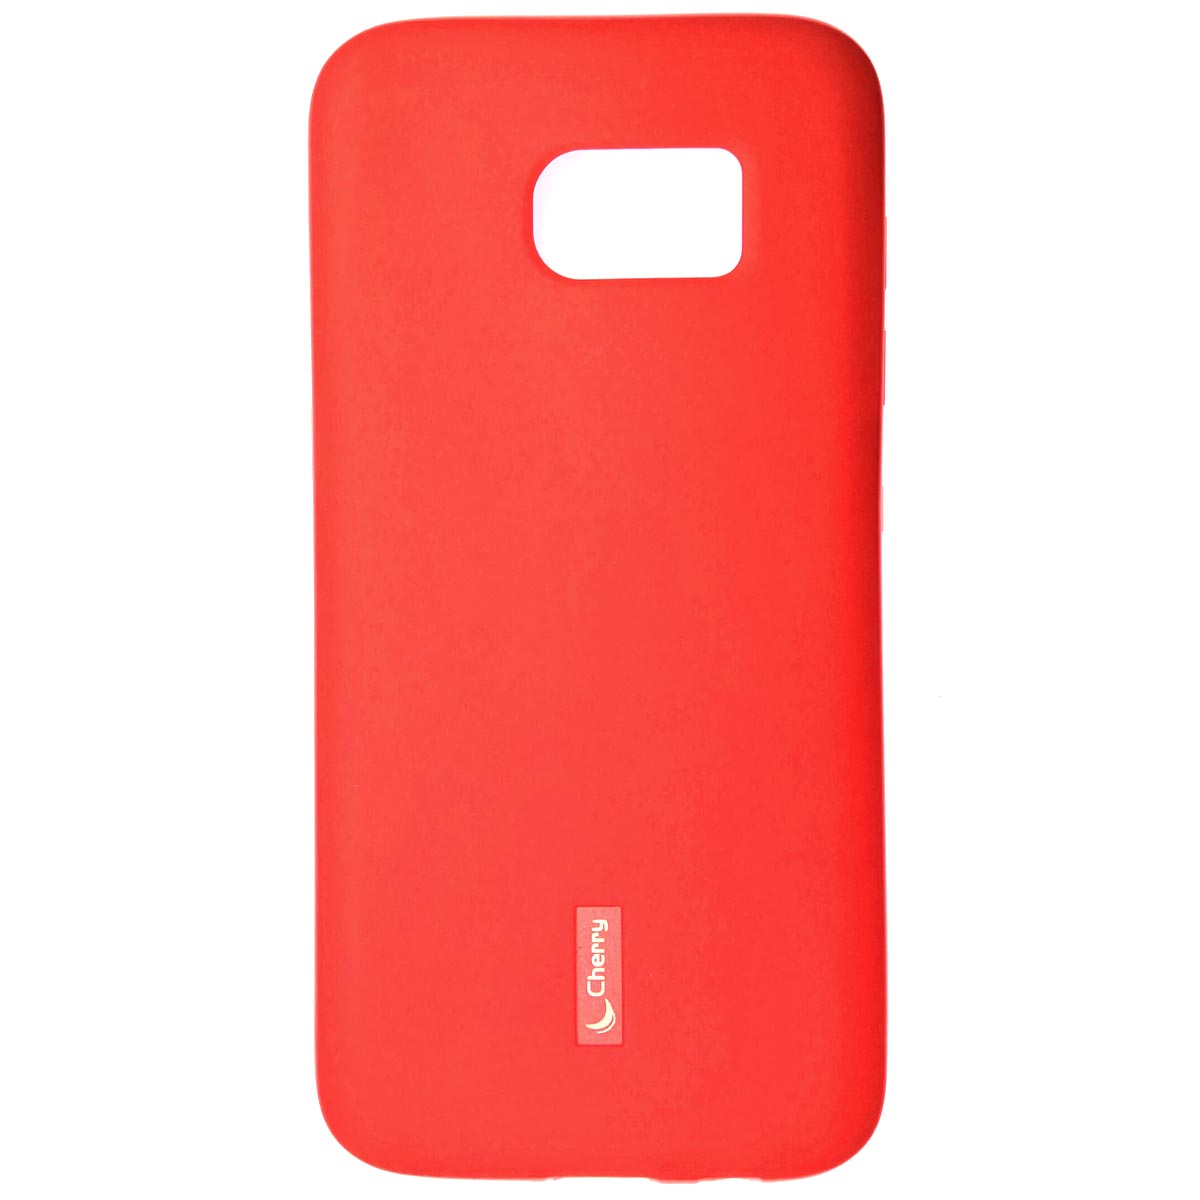 Чехол накладка Cherry для SAMSUNG Galaxy S7 Edge (SM-G935), силикон, цвет красный